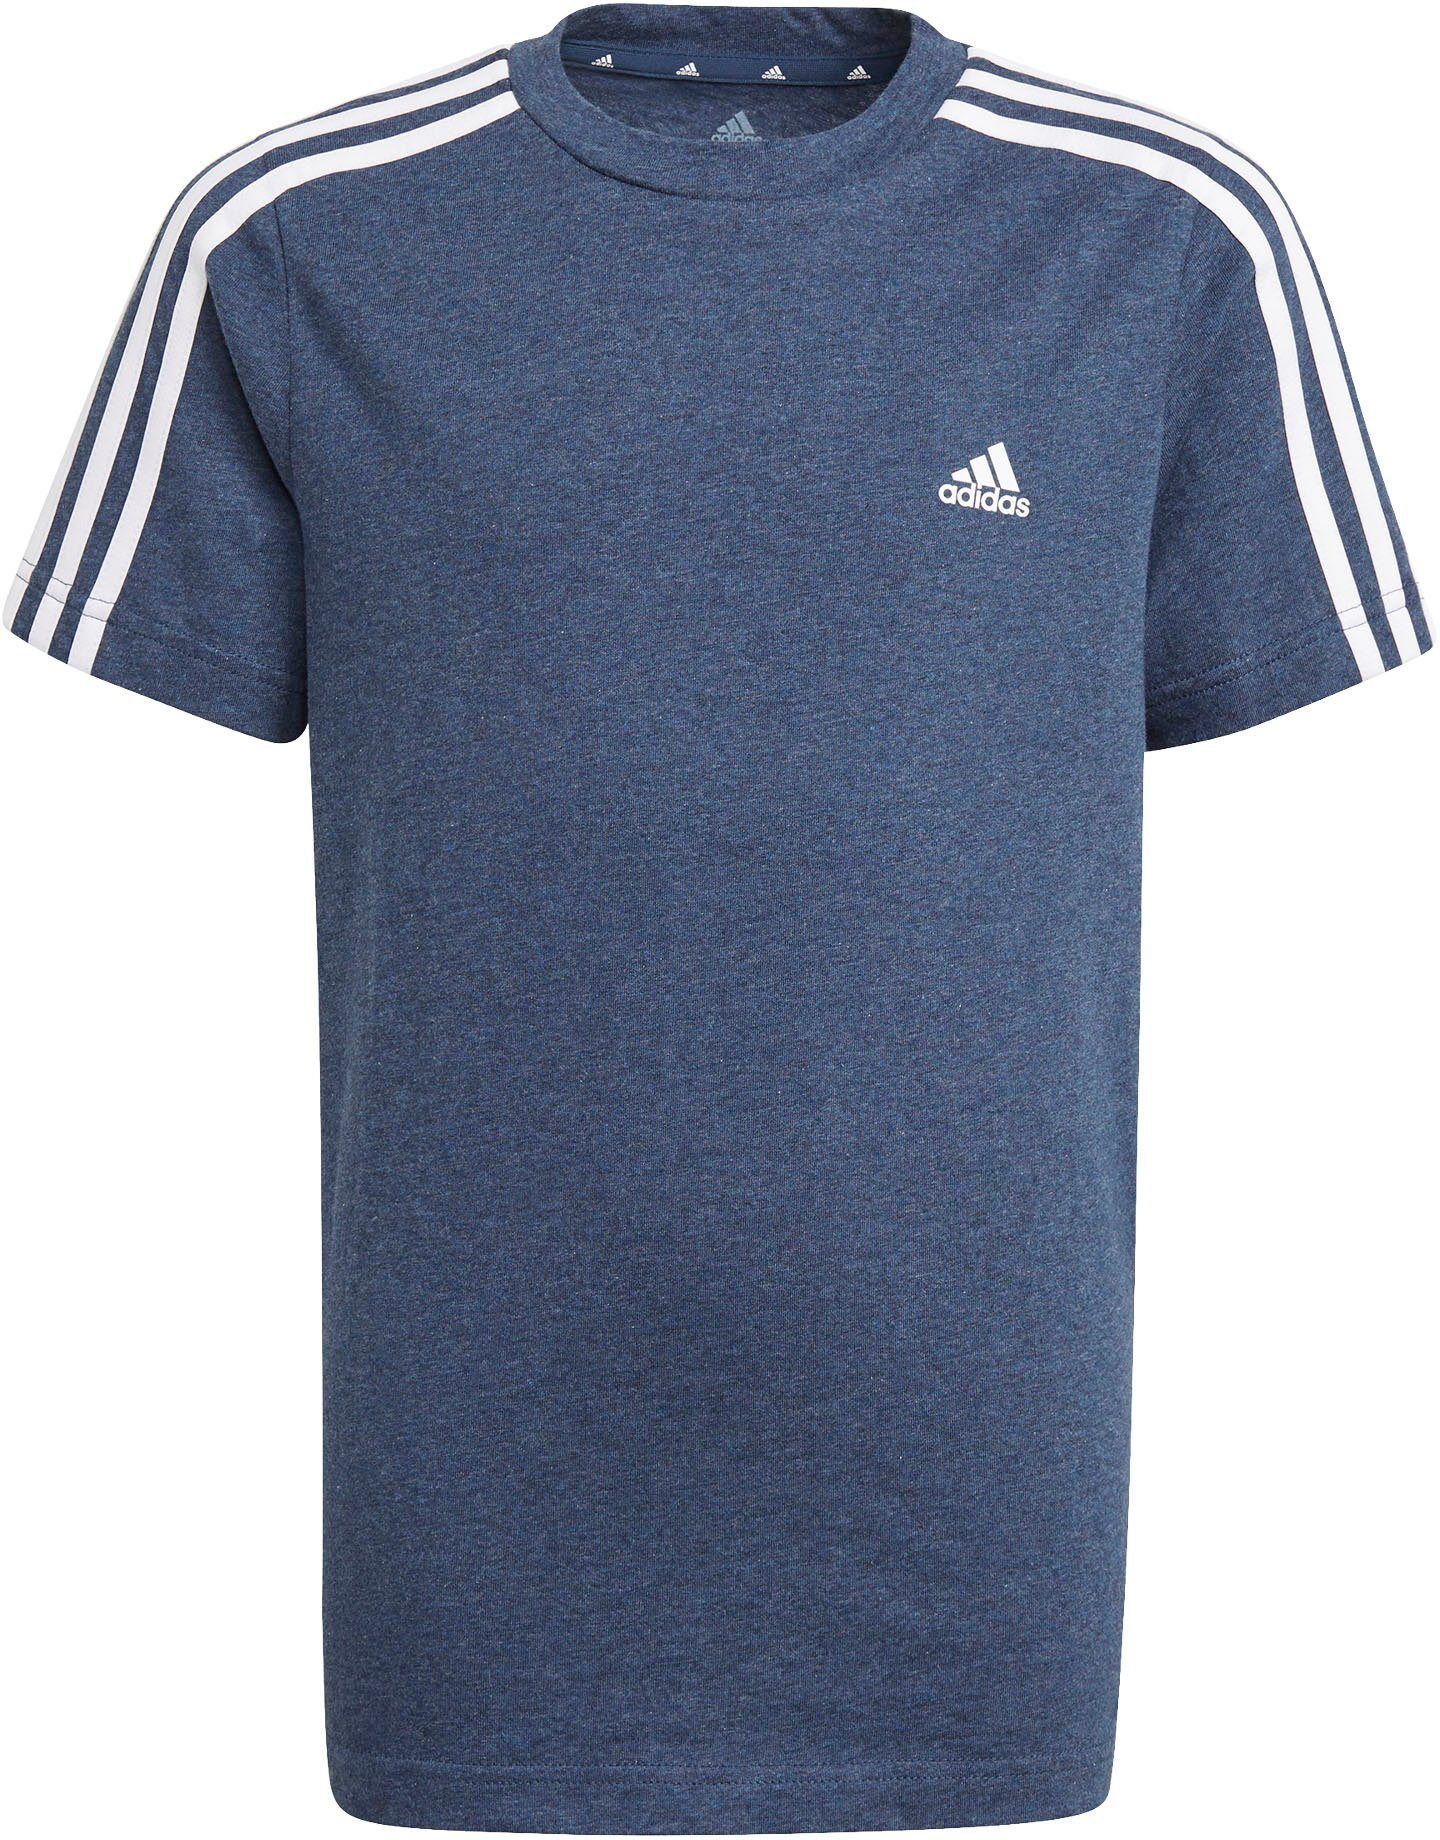 Adidas Performance T-Shirt »ADIDAS ESSENTIALS 3-STREIFEN«, dunkelblau